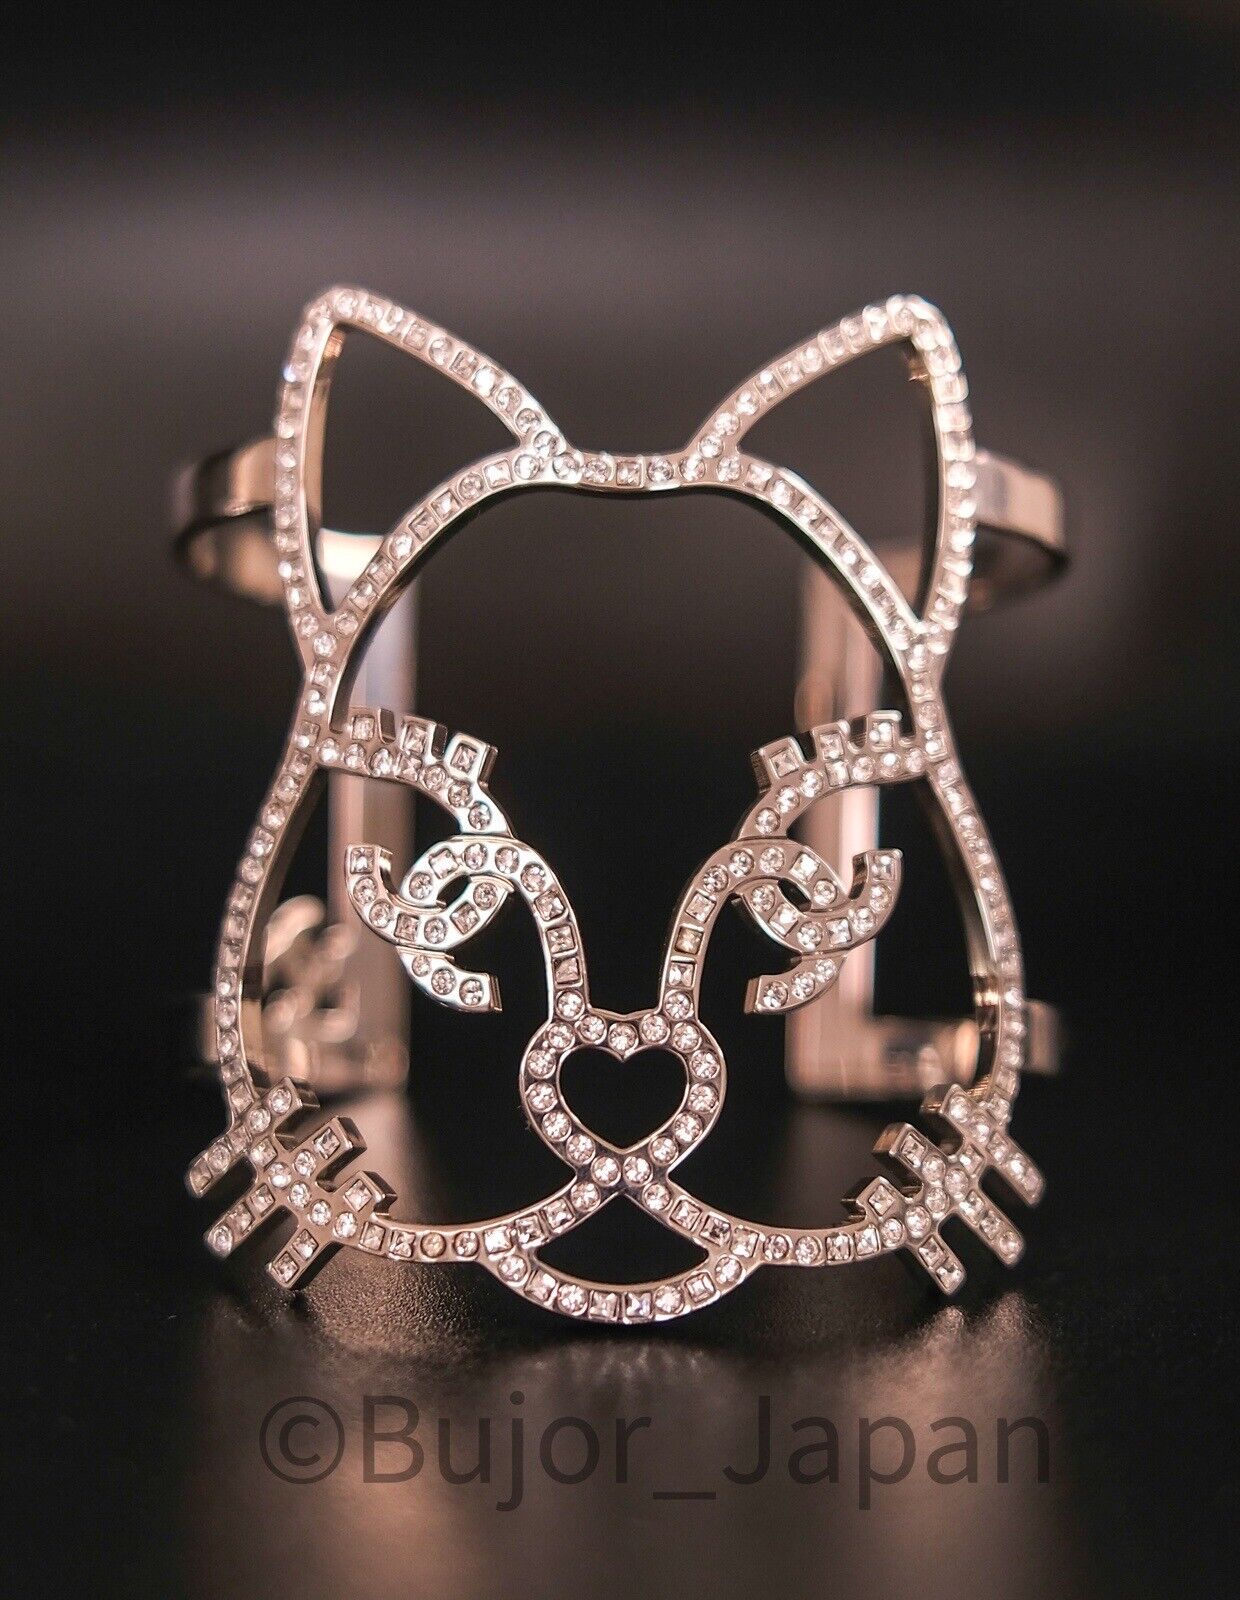 Chanel bracelet , Chanel 2016 Kitty Choupette Cat Emoji Cuff Bangle Bracelet made in Italy , Vintage Chanel